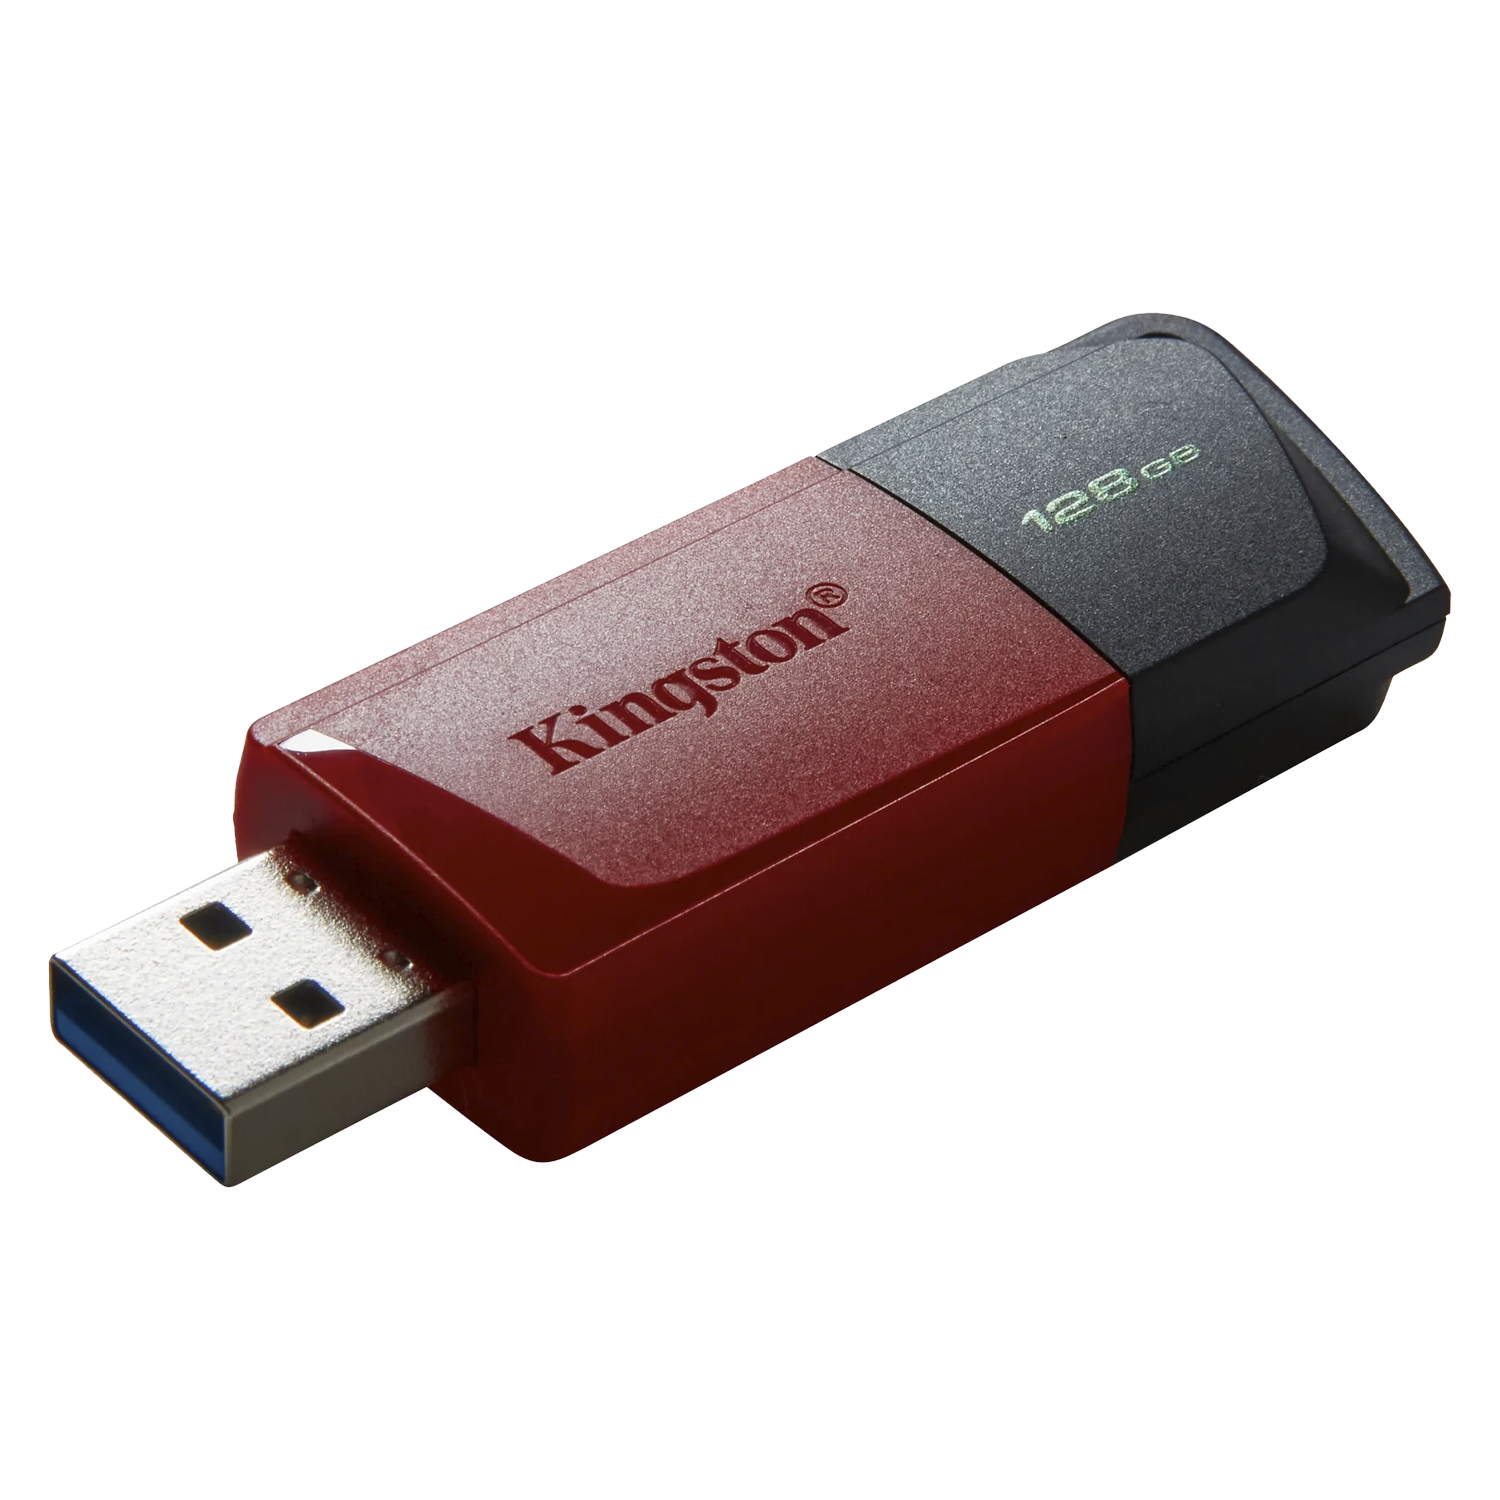 Pendrive Kingston DataTraveler Exodia 128GB USB 3.2 - DTXM/128